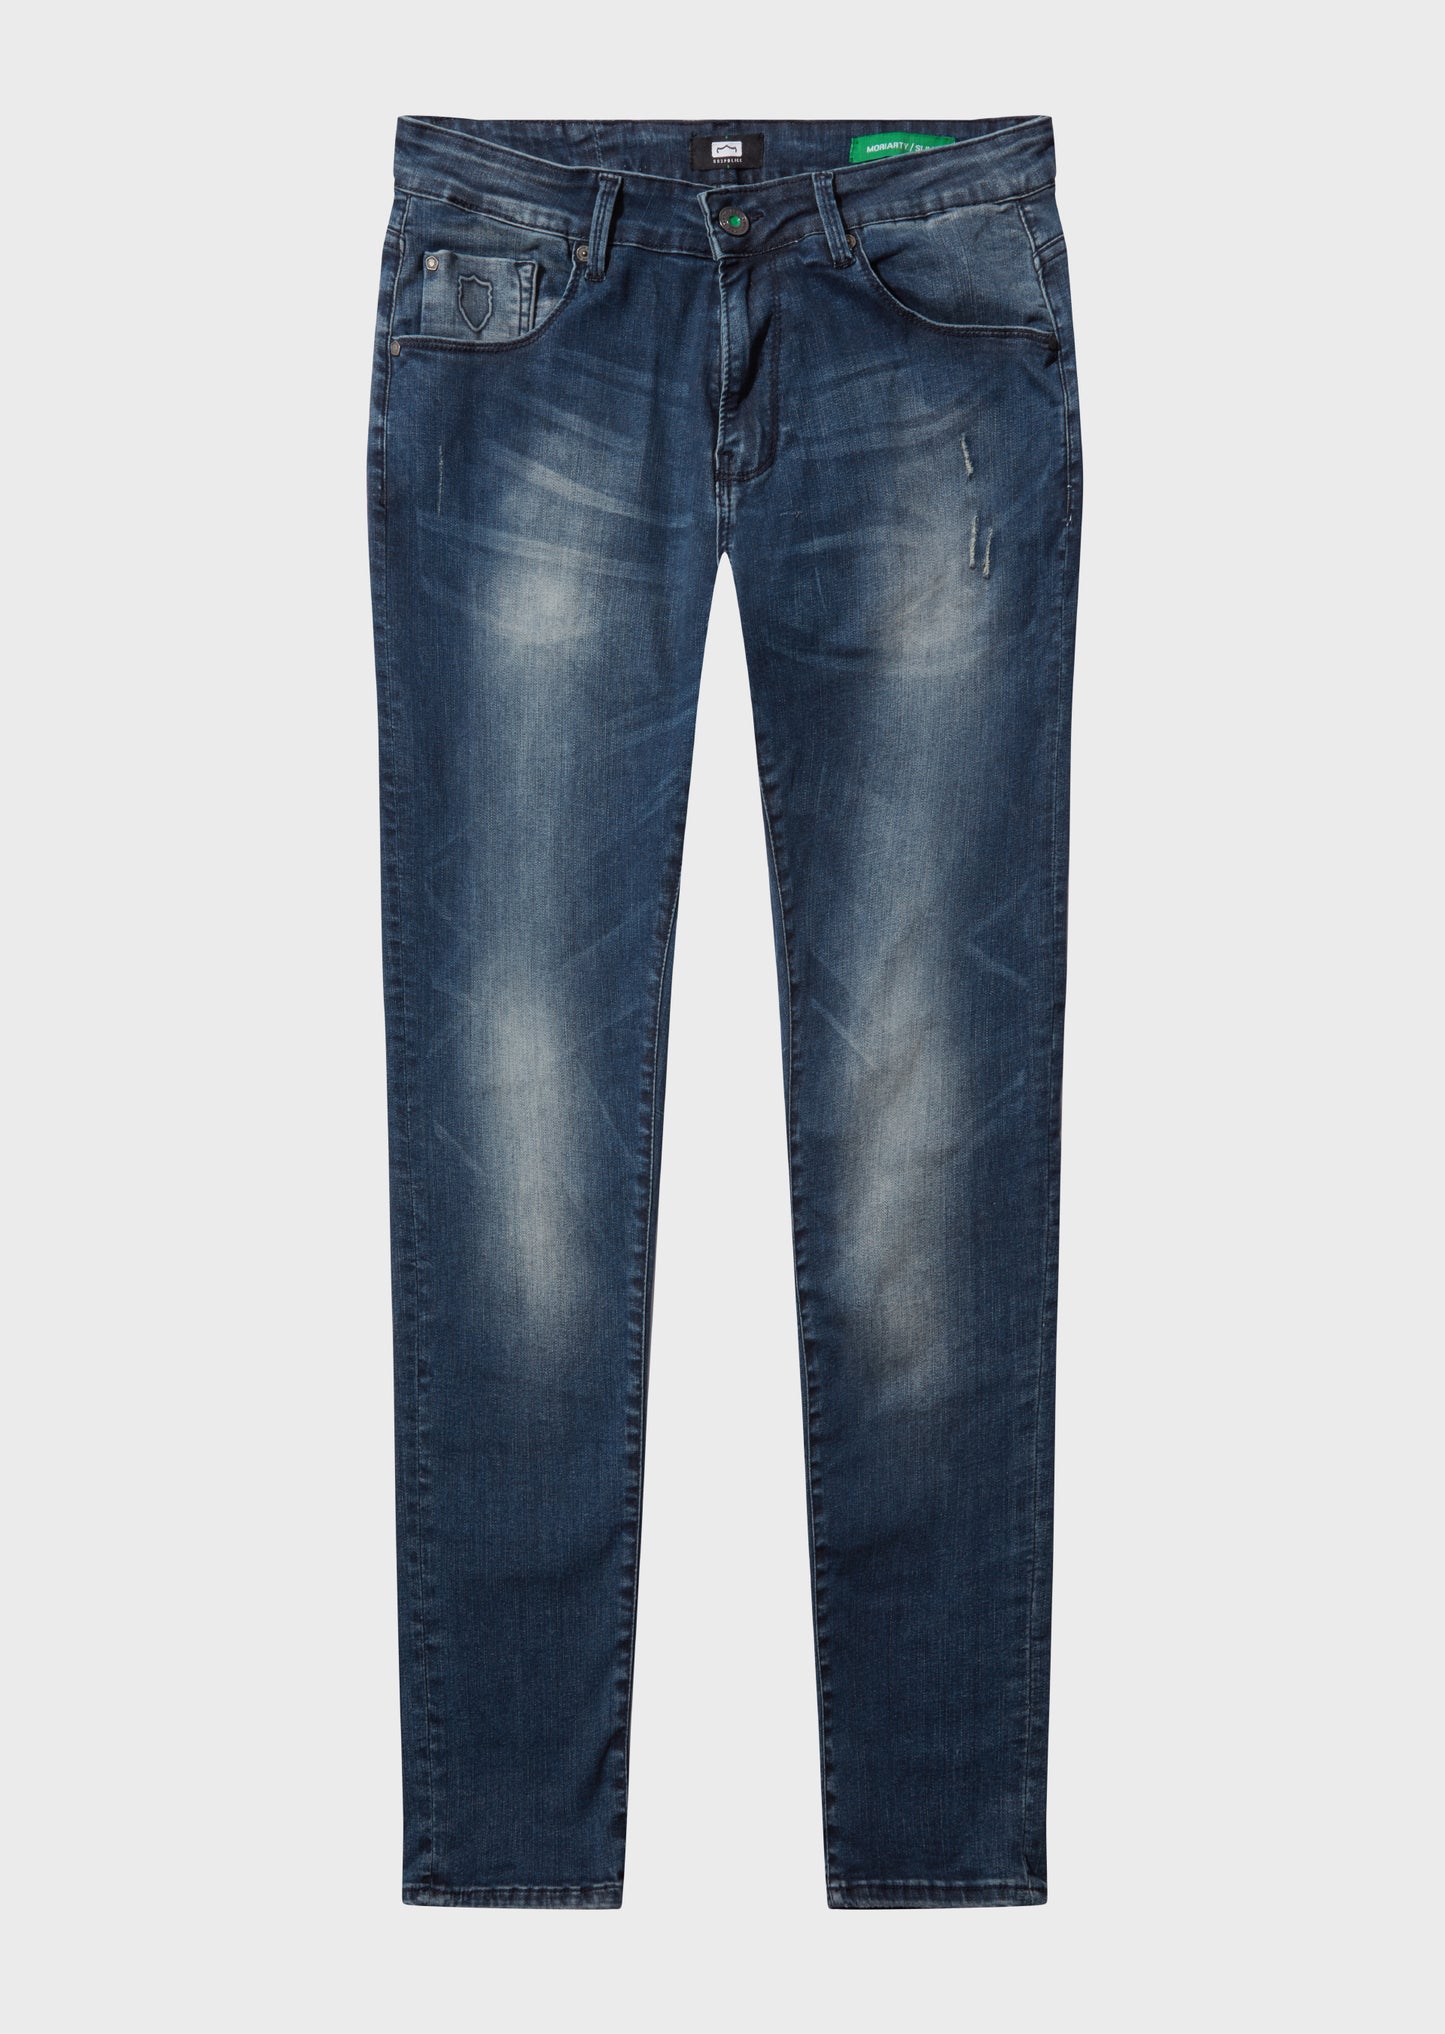 Moriarty Lak 537 Activeflex Super Stretch Mid Wash Jeans